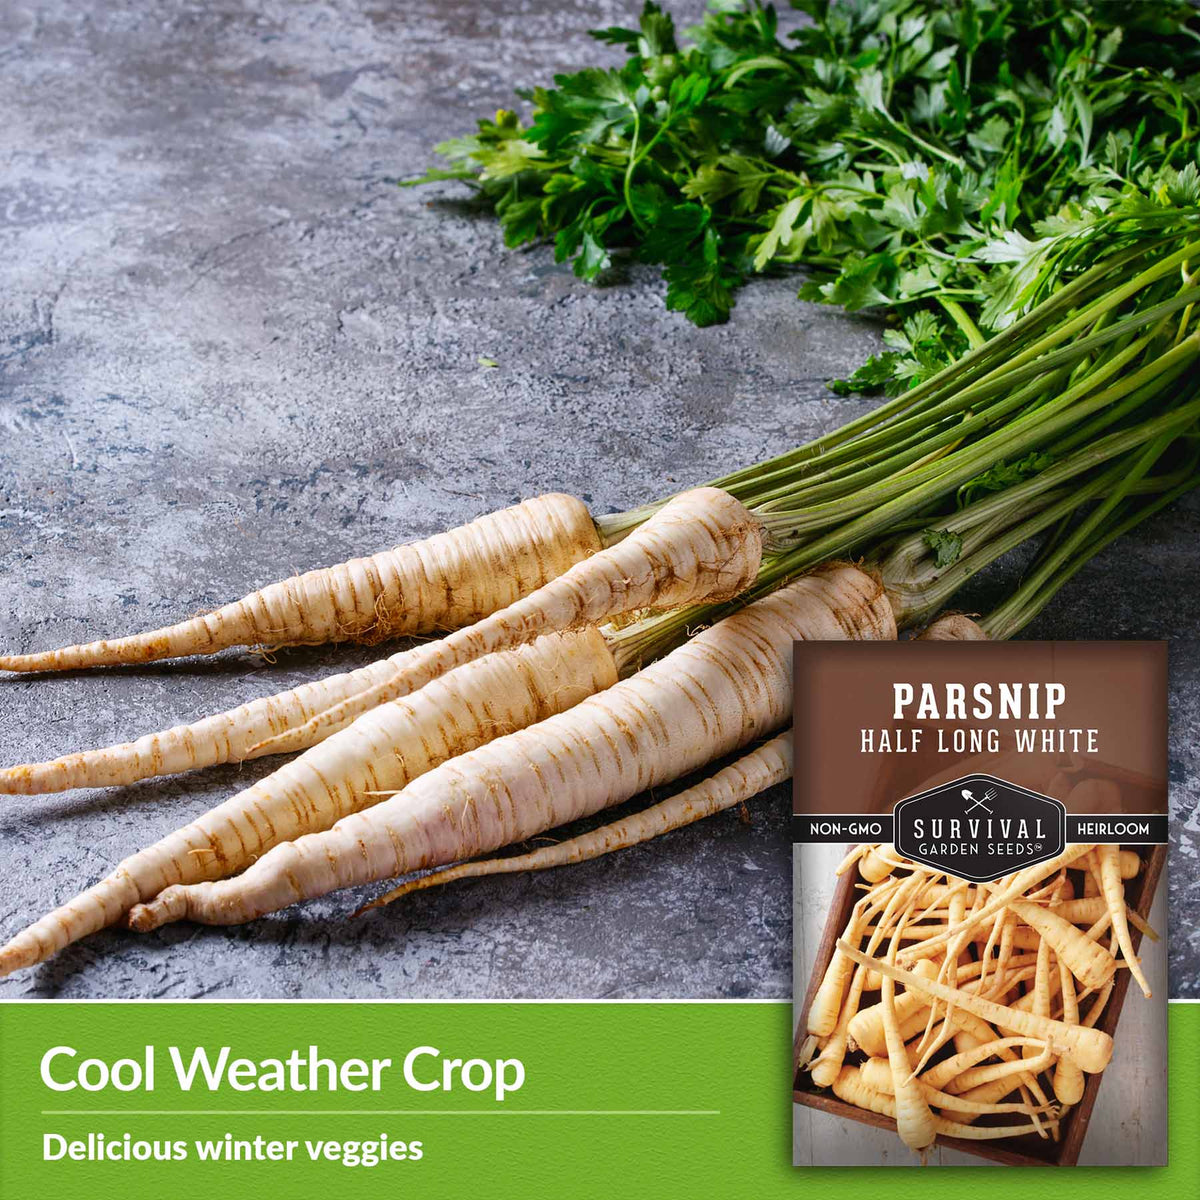 Cool weather crop - delicious winter veggies